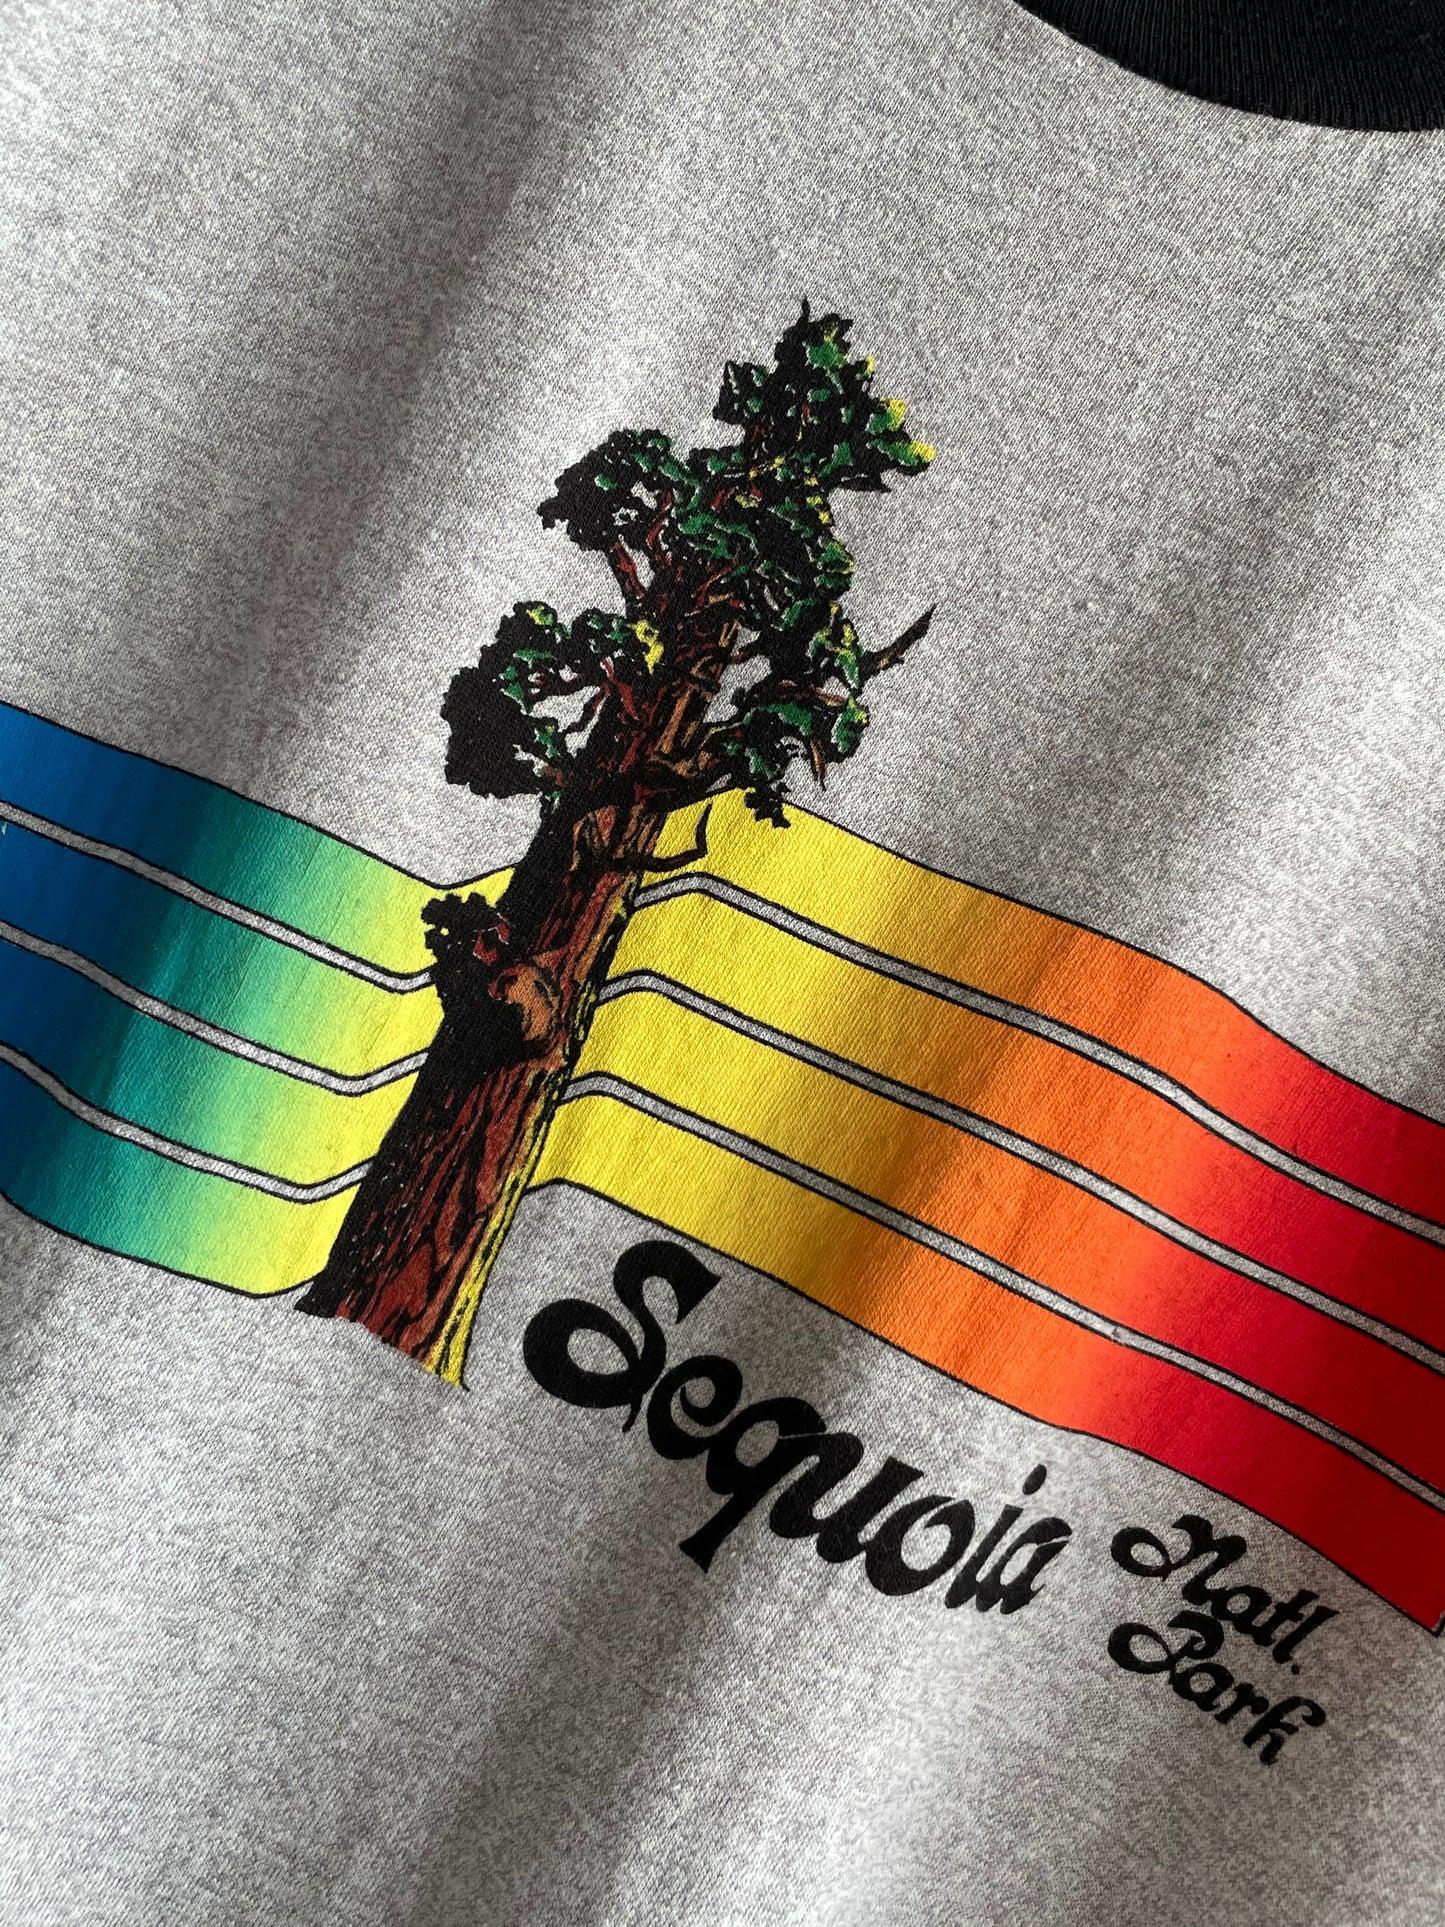 Vintage Sequoia National Park T-Shirt